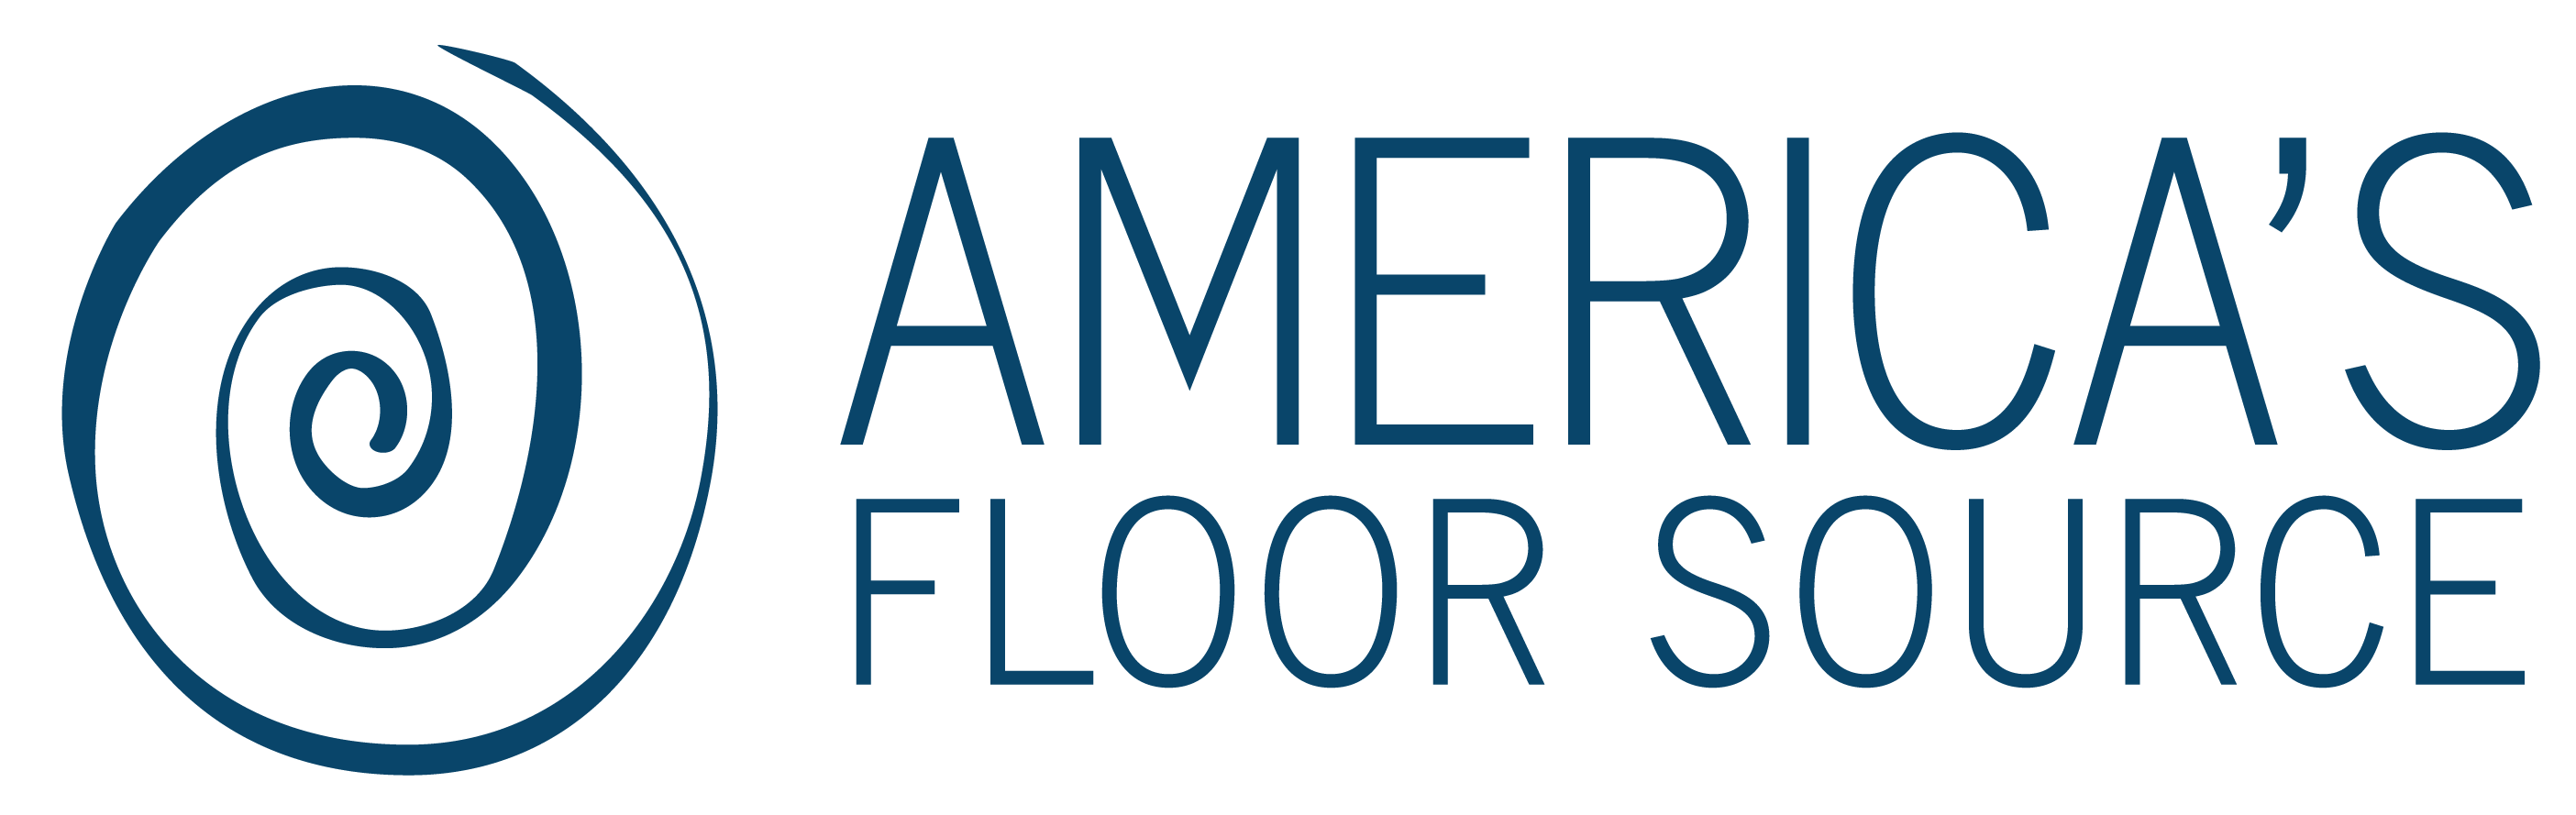 America's Floor Source logo